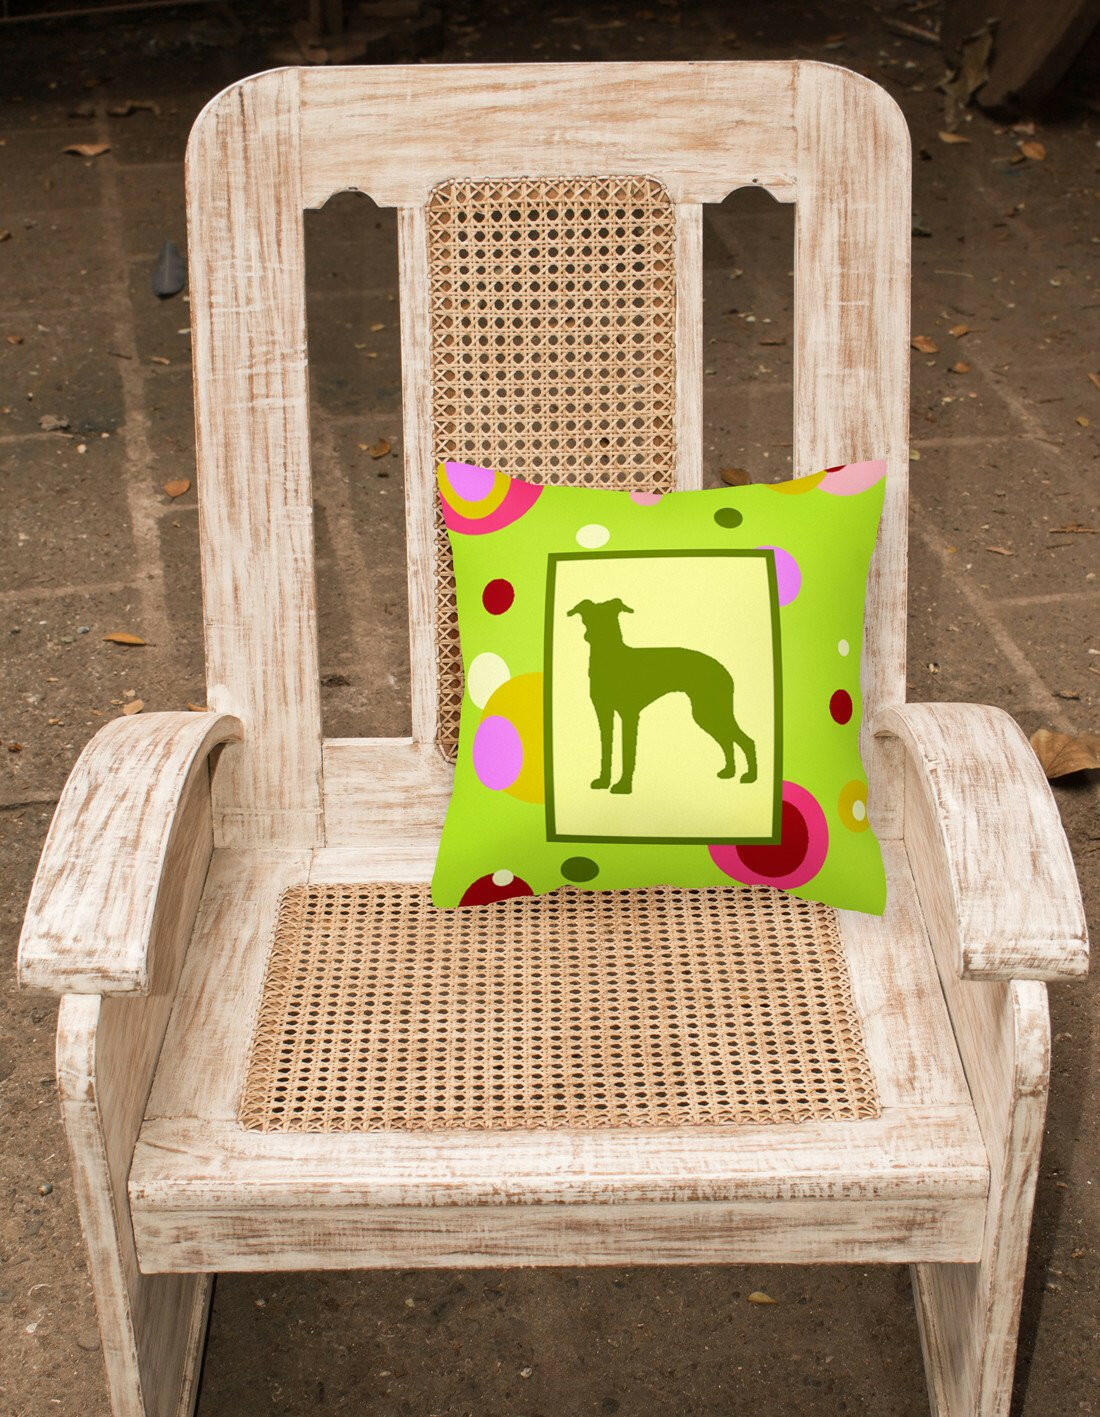 Lime Green Dots Italian Greyhound  Fabric Decorative Pillow CK1102PW1414 by Caroline's Treasures